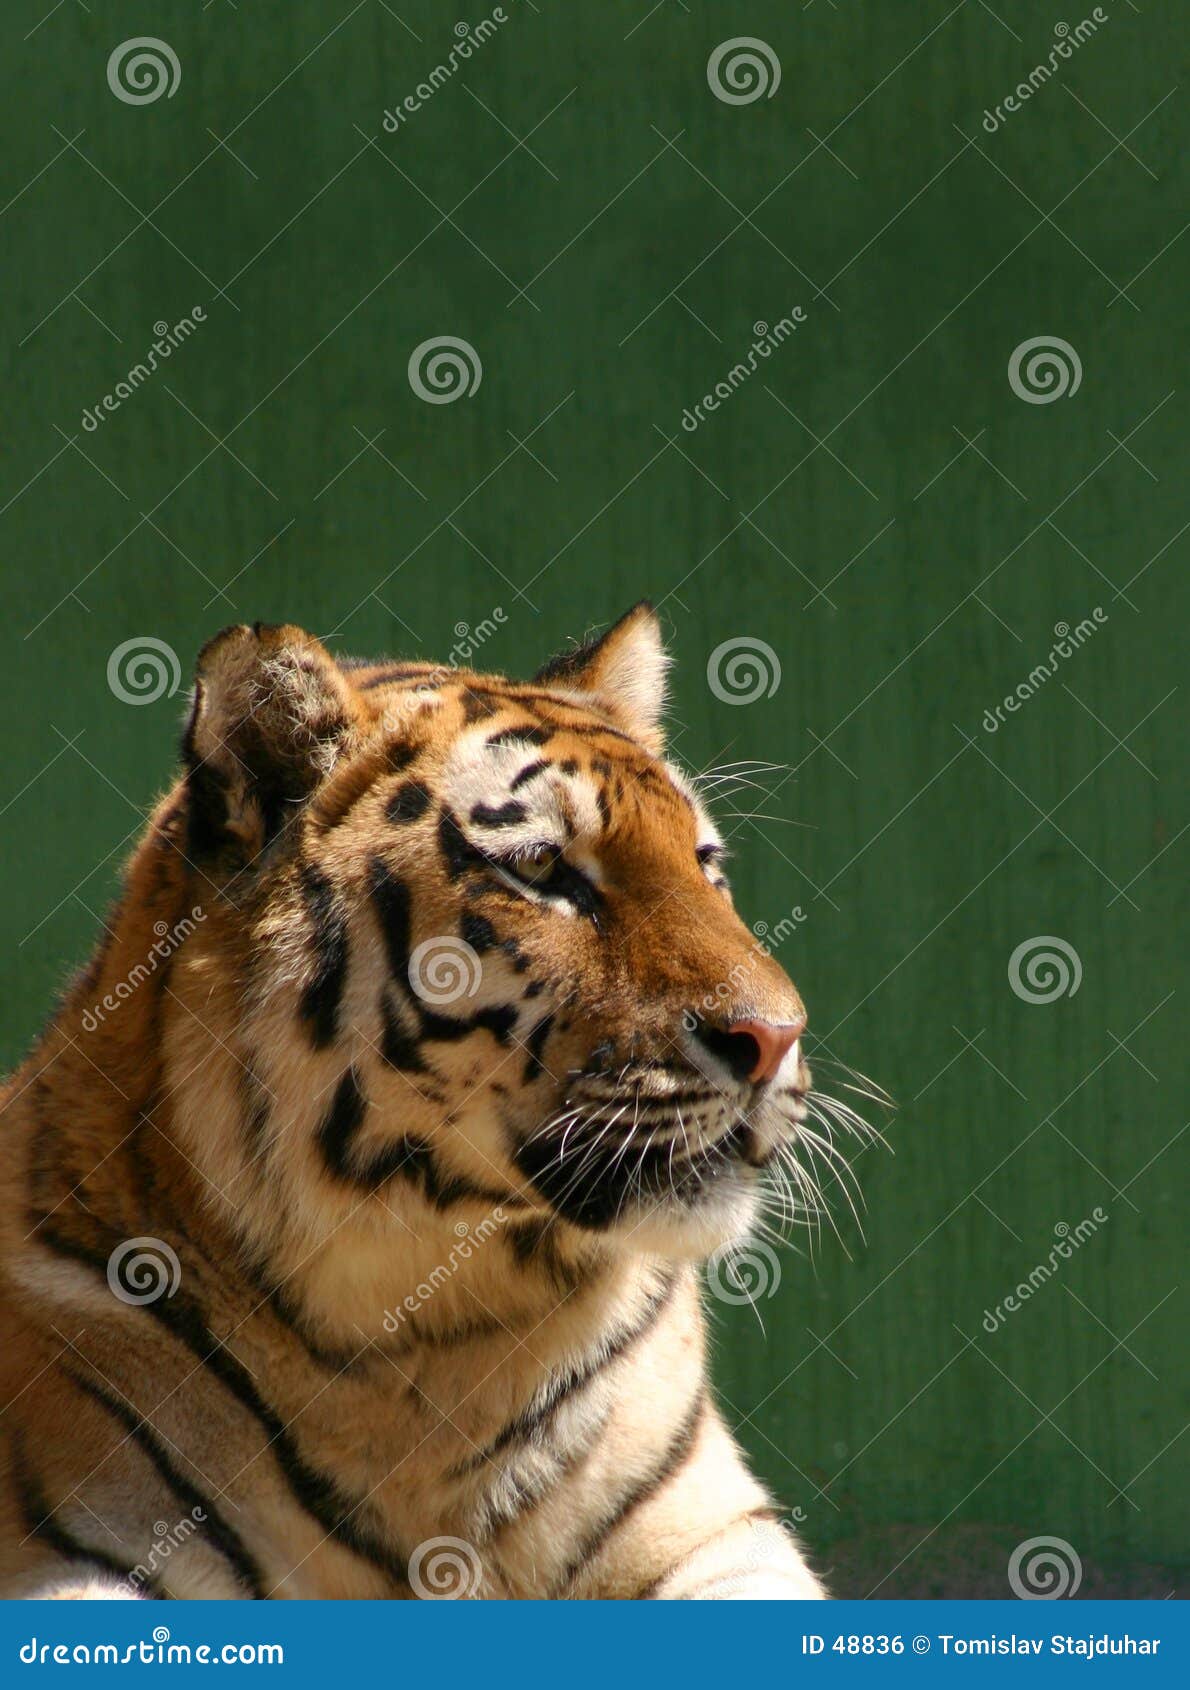 tiger-portrait-48836.jpg